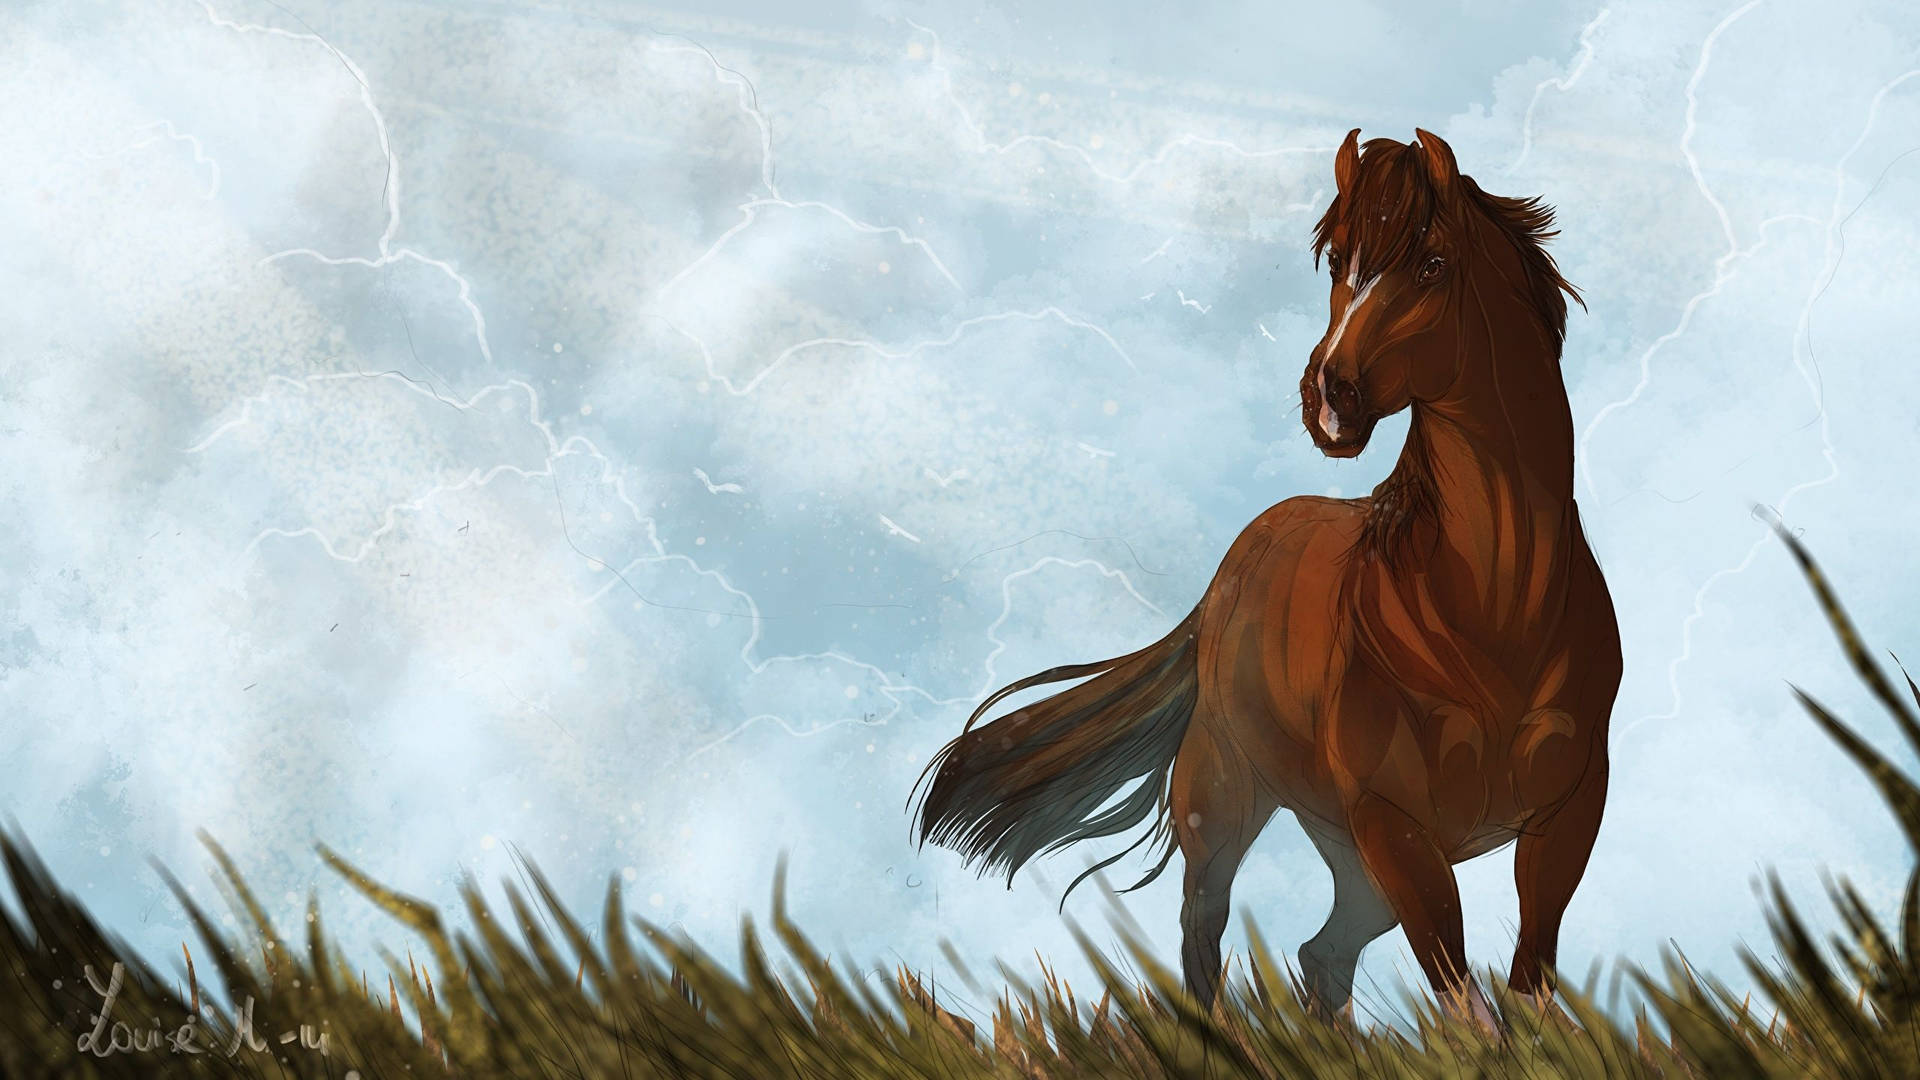 Spirit Stallion Of The Cimarron on Grassy Pastures Wallpaper